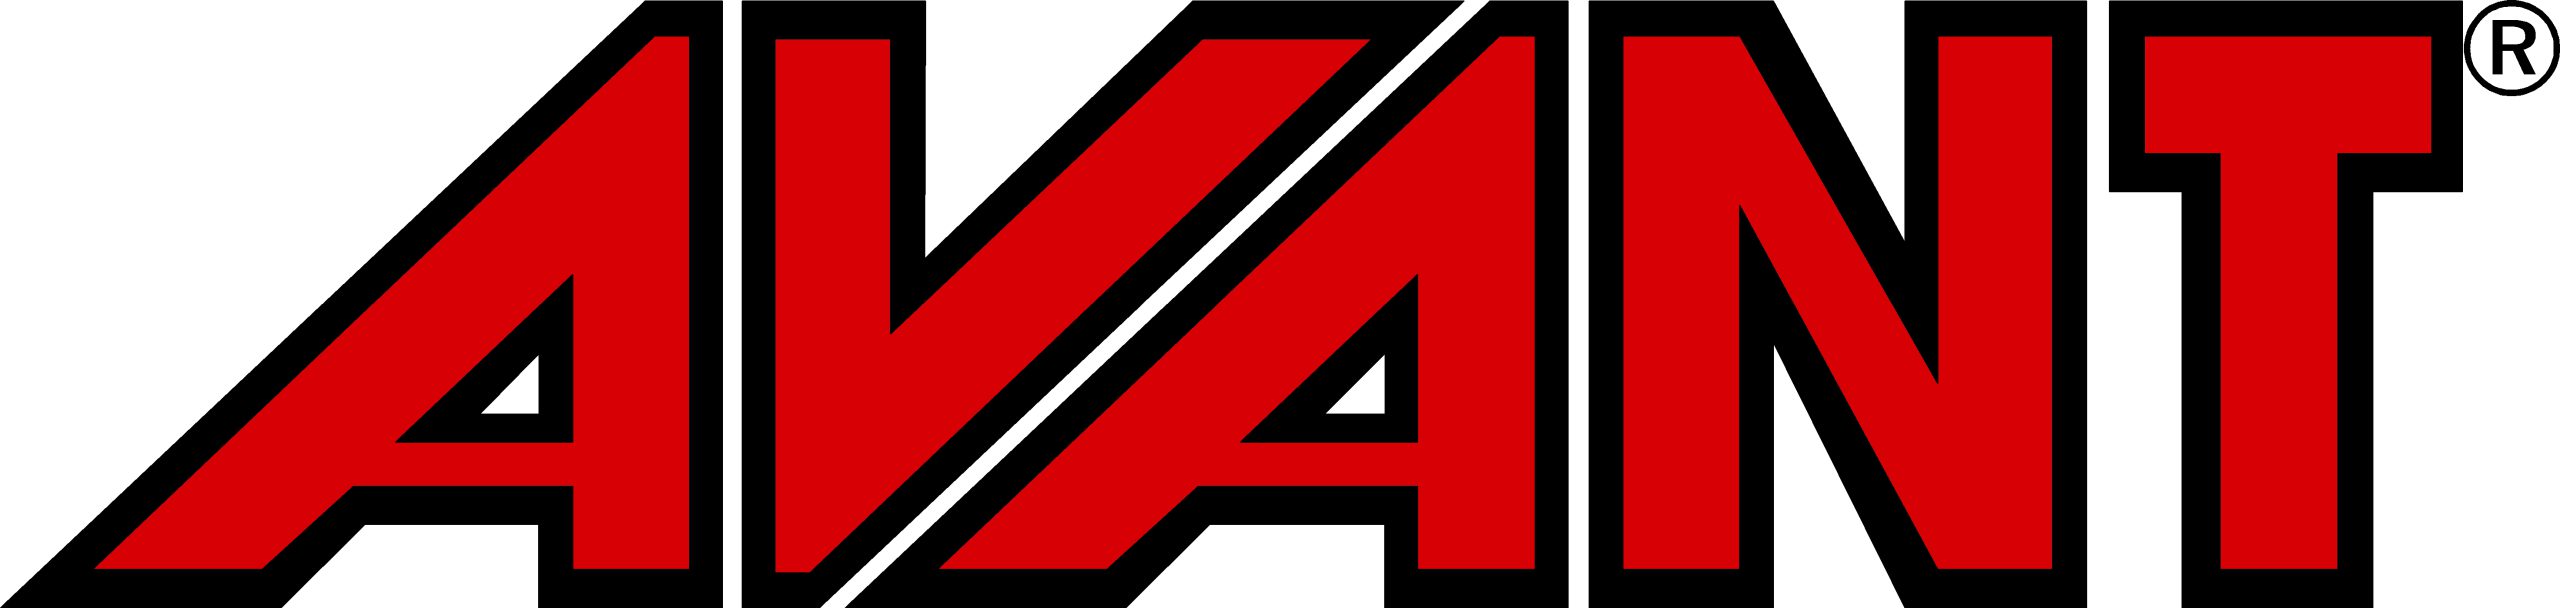 avant_logo - groot